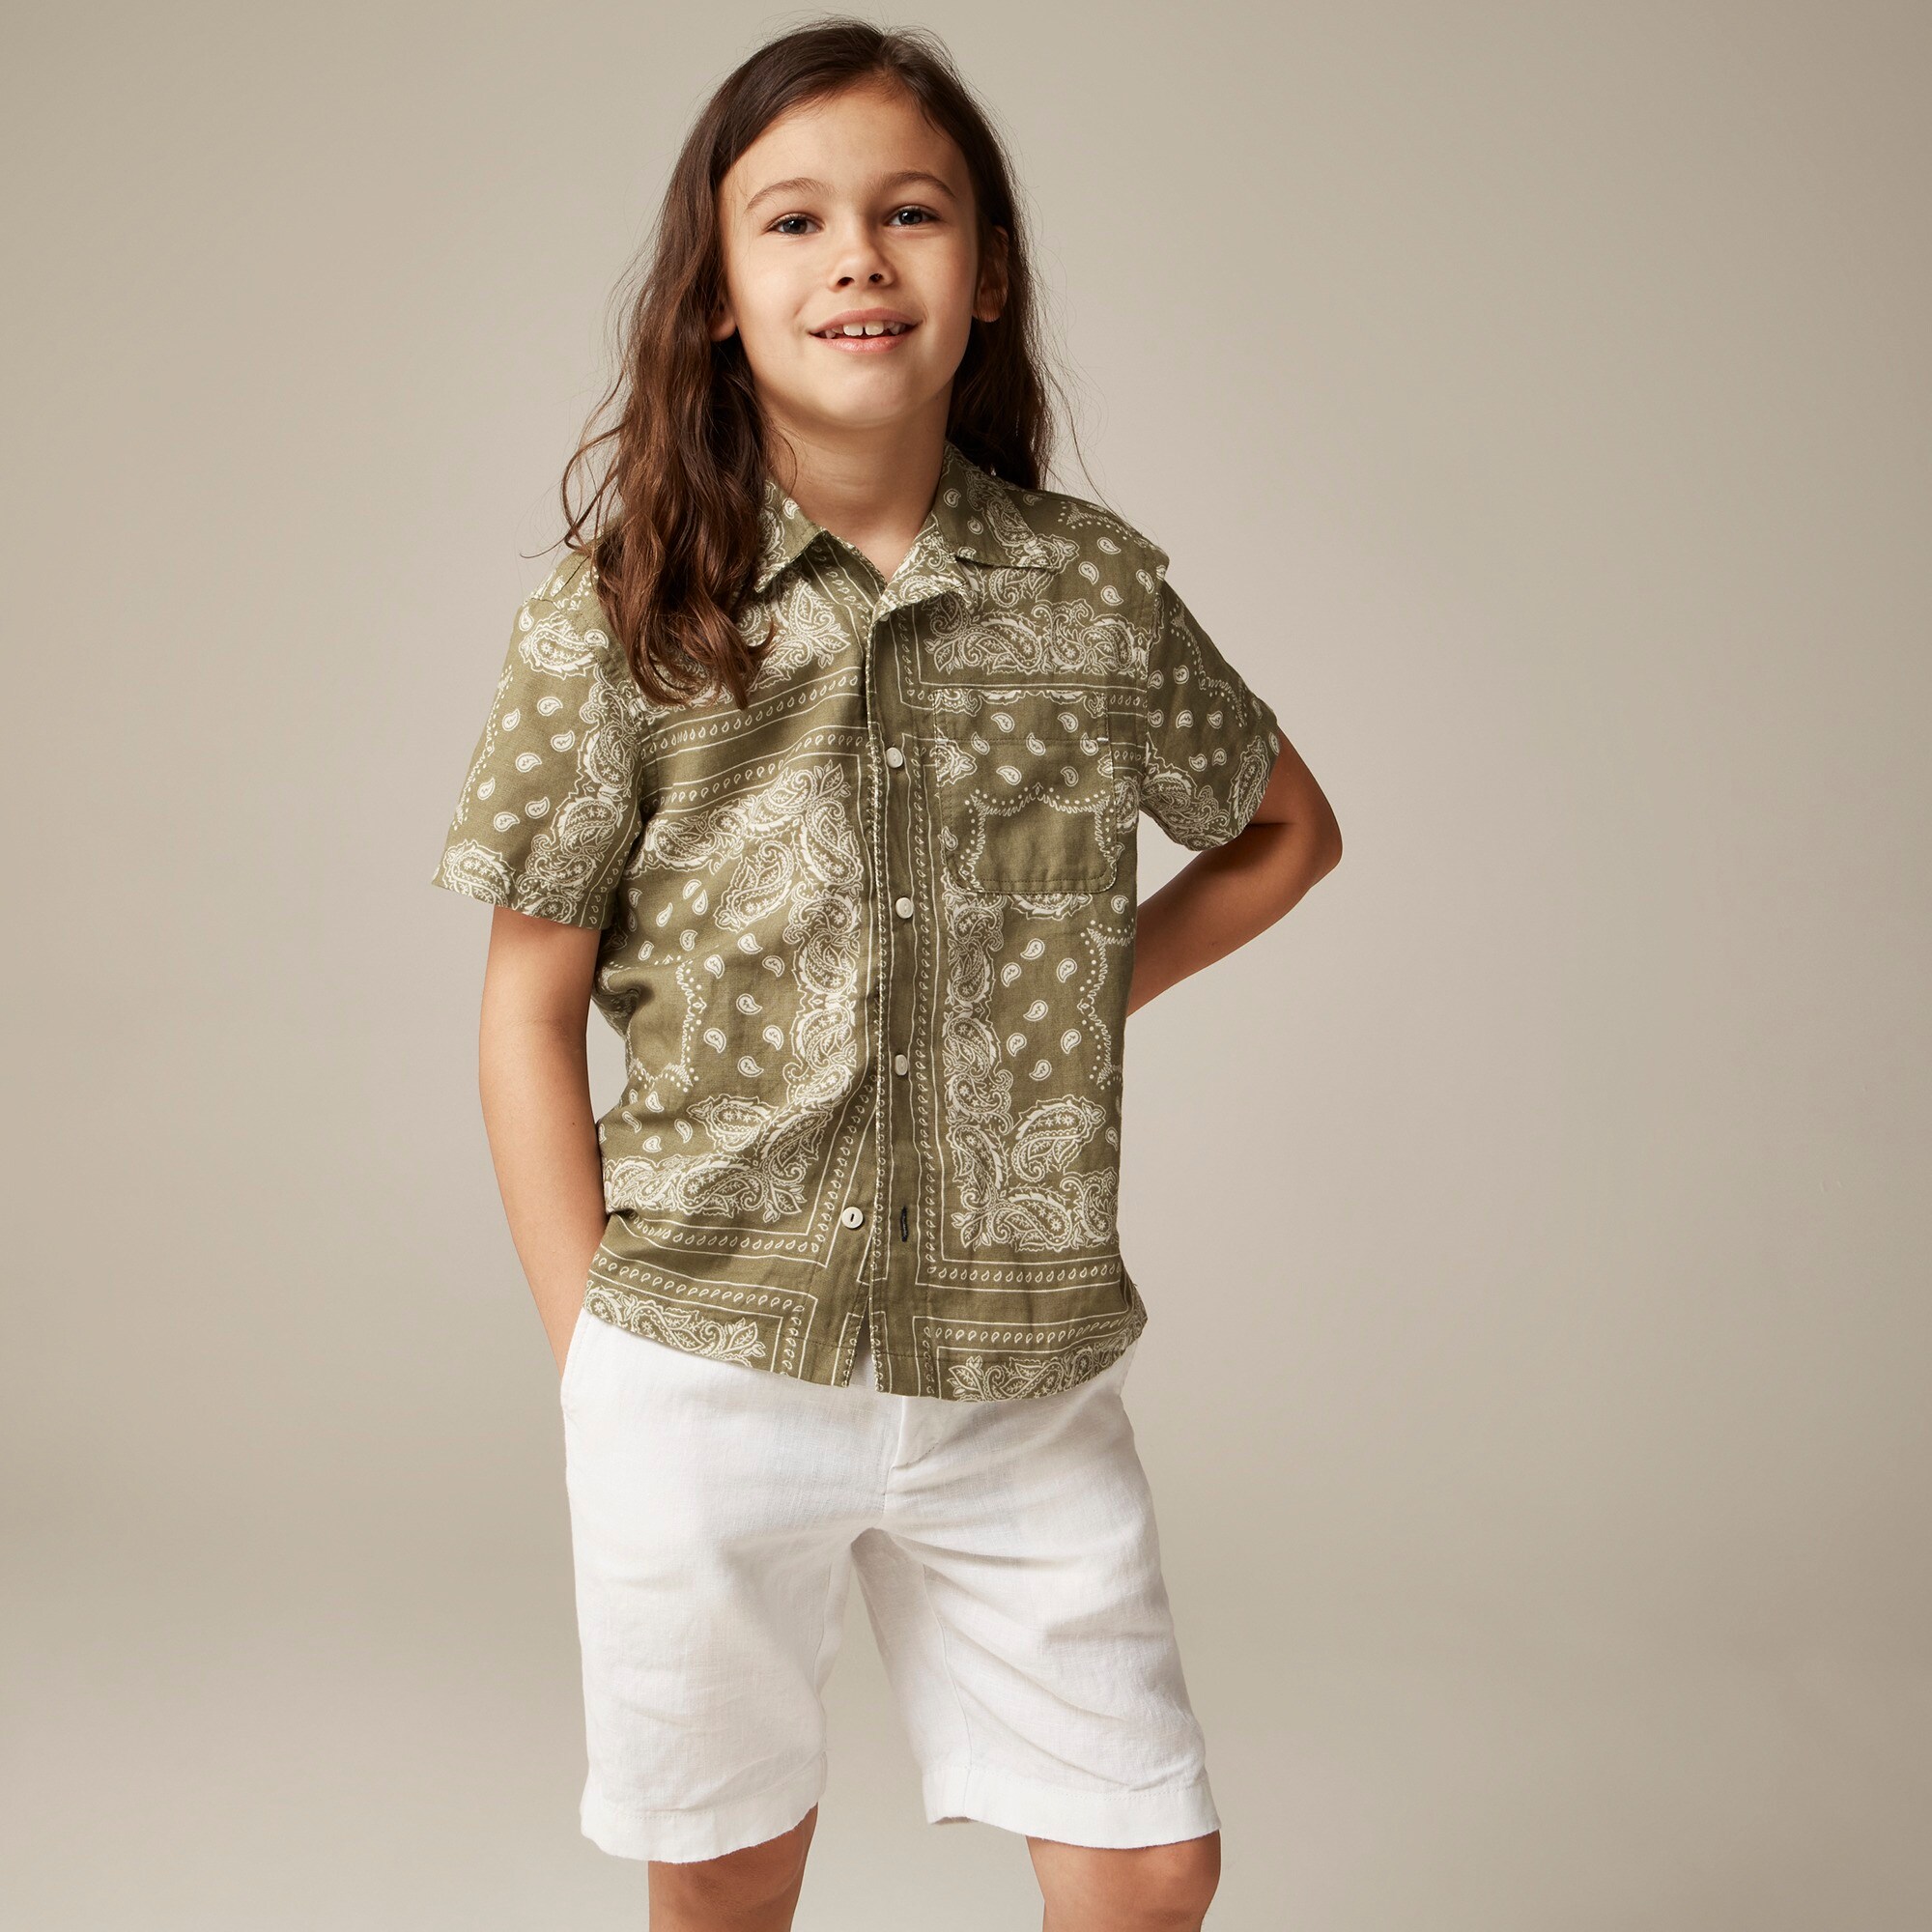  Kids' printed short-sleeve camp shirt in linen-cotton blend